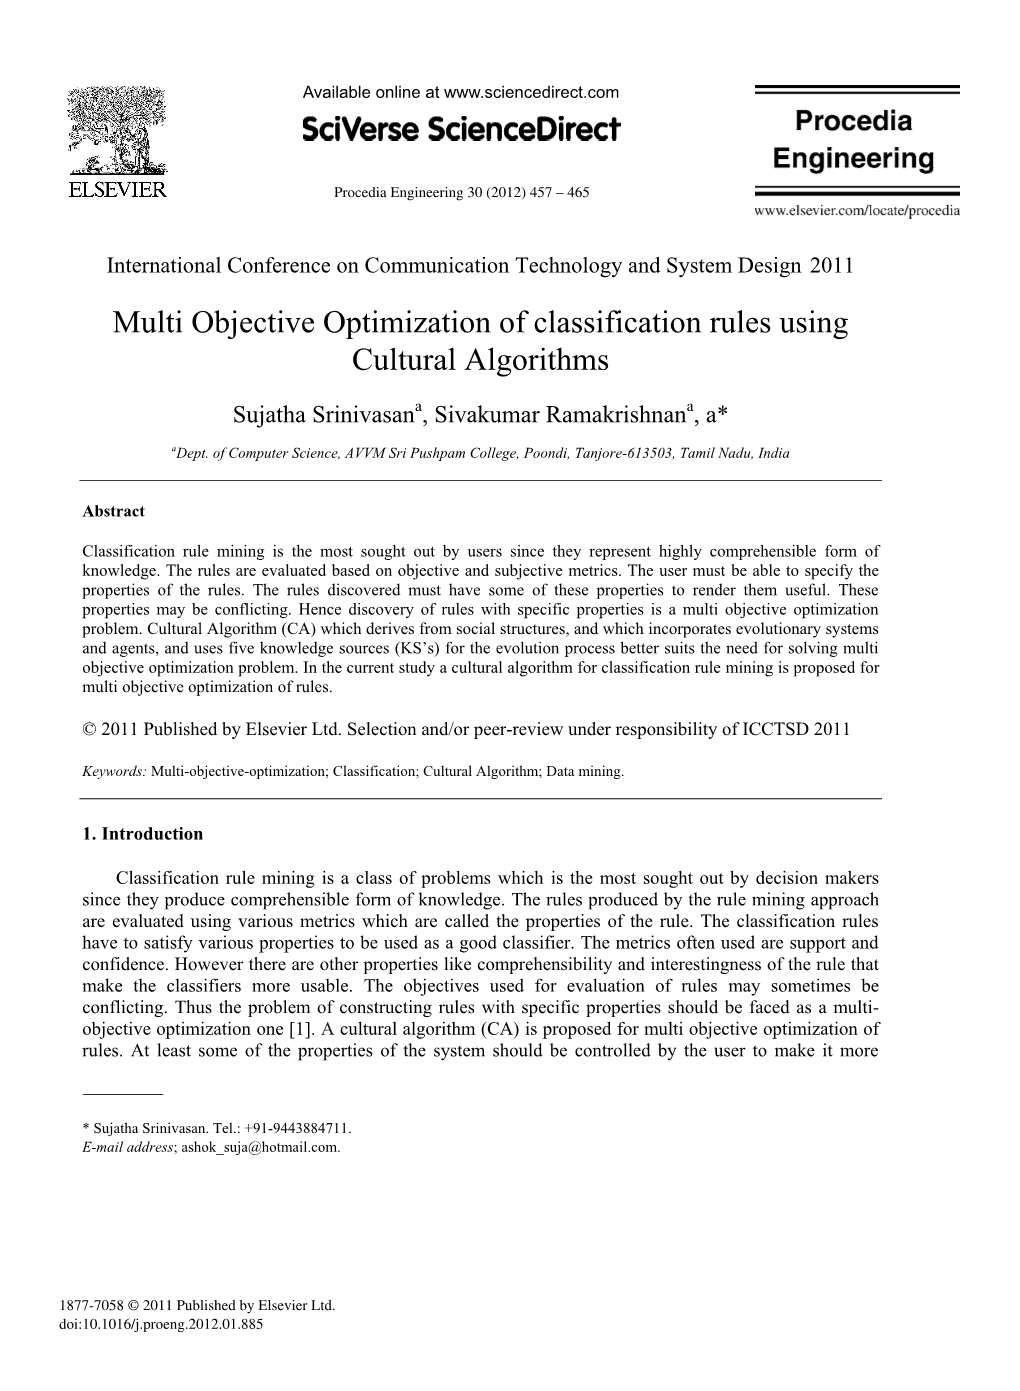 Multi Objective Optimization of Classification Rules Using Cultural Algorithms